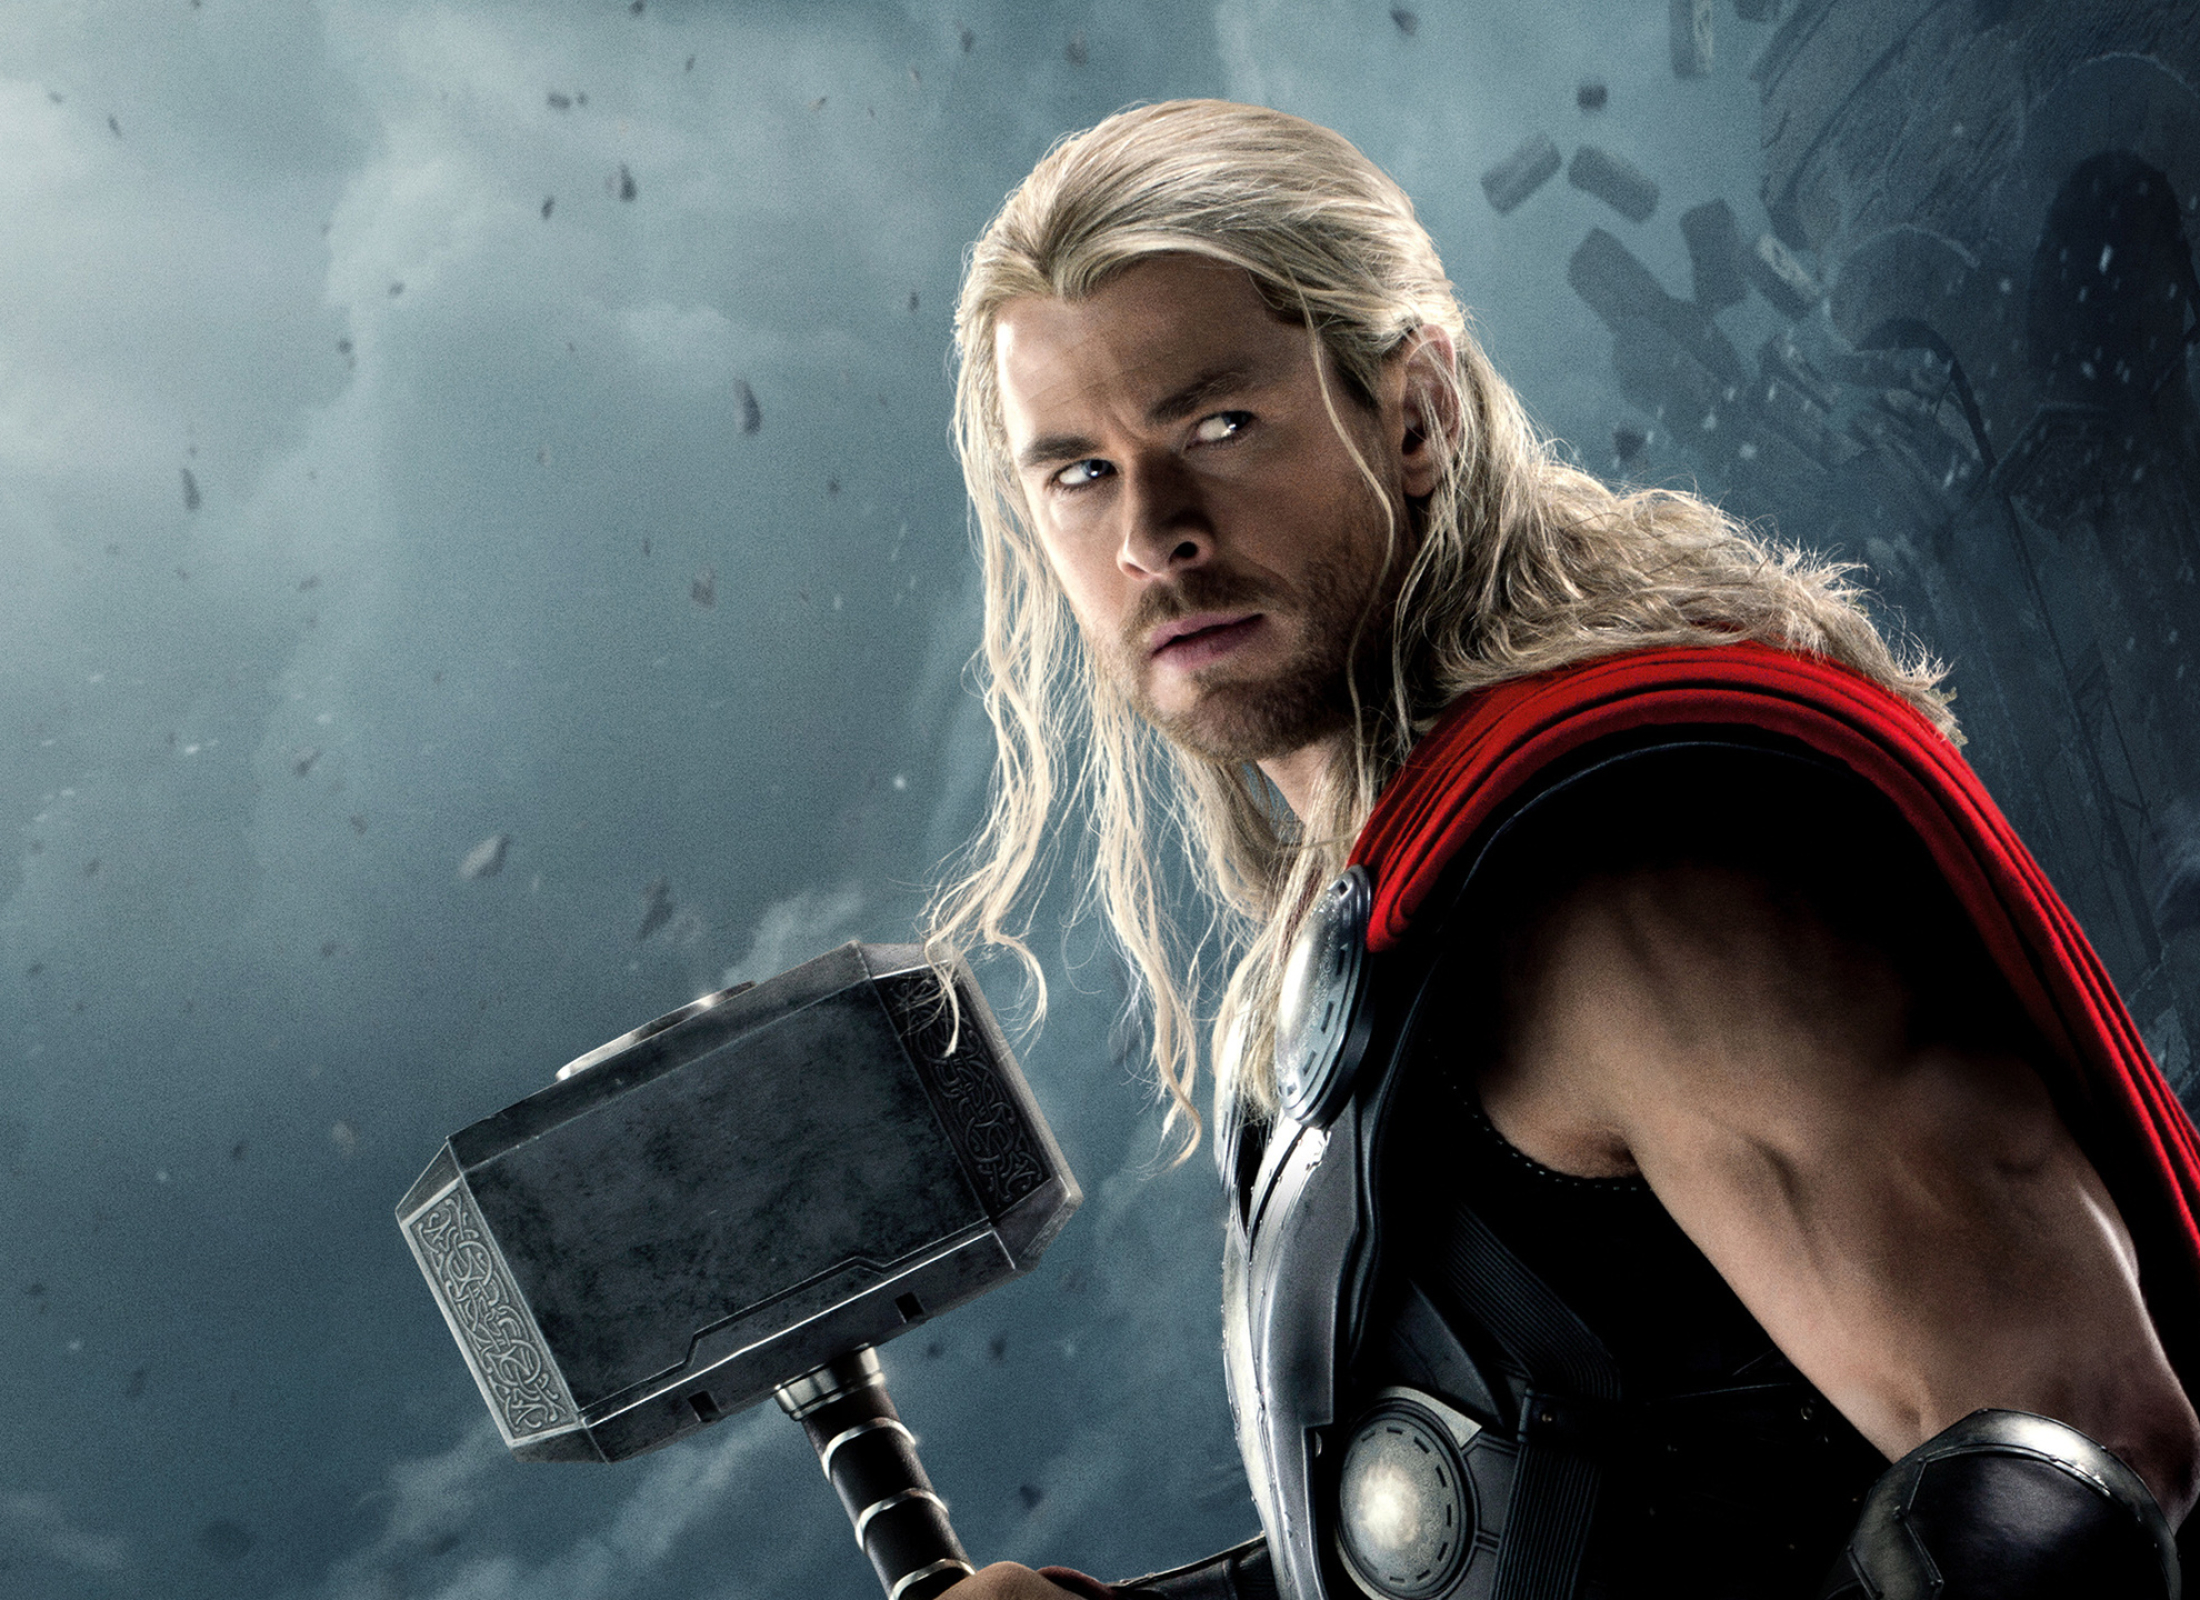 Chris Hemsworth, Thor, Avengers wallpaper, Epic superhero image, 2200x1600 HD Desktop